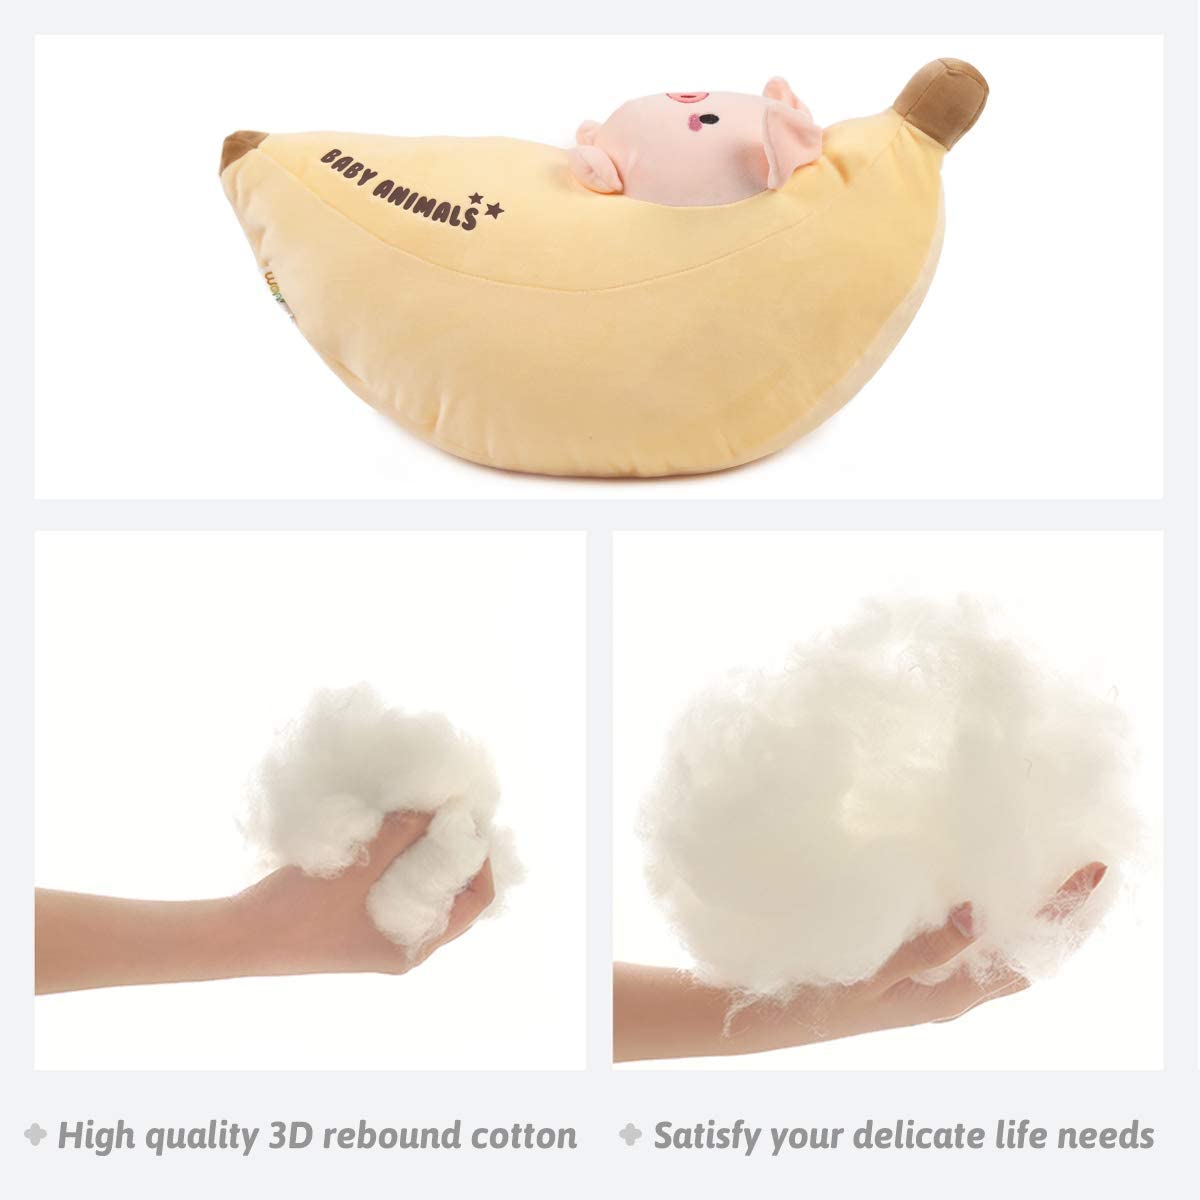 Kawaii Pig Plush Pillow Cute Banana Stuffed Animal 22 inch